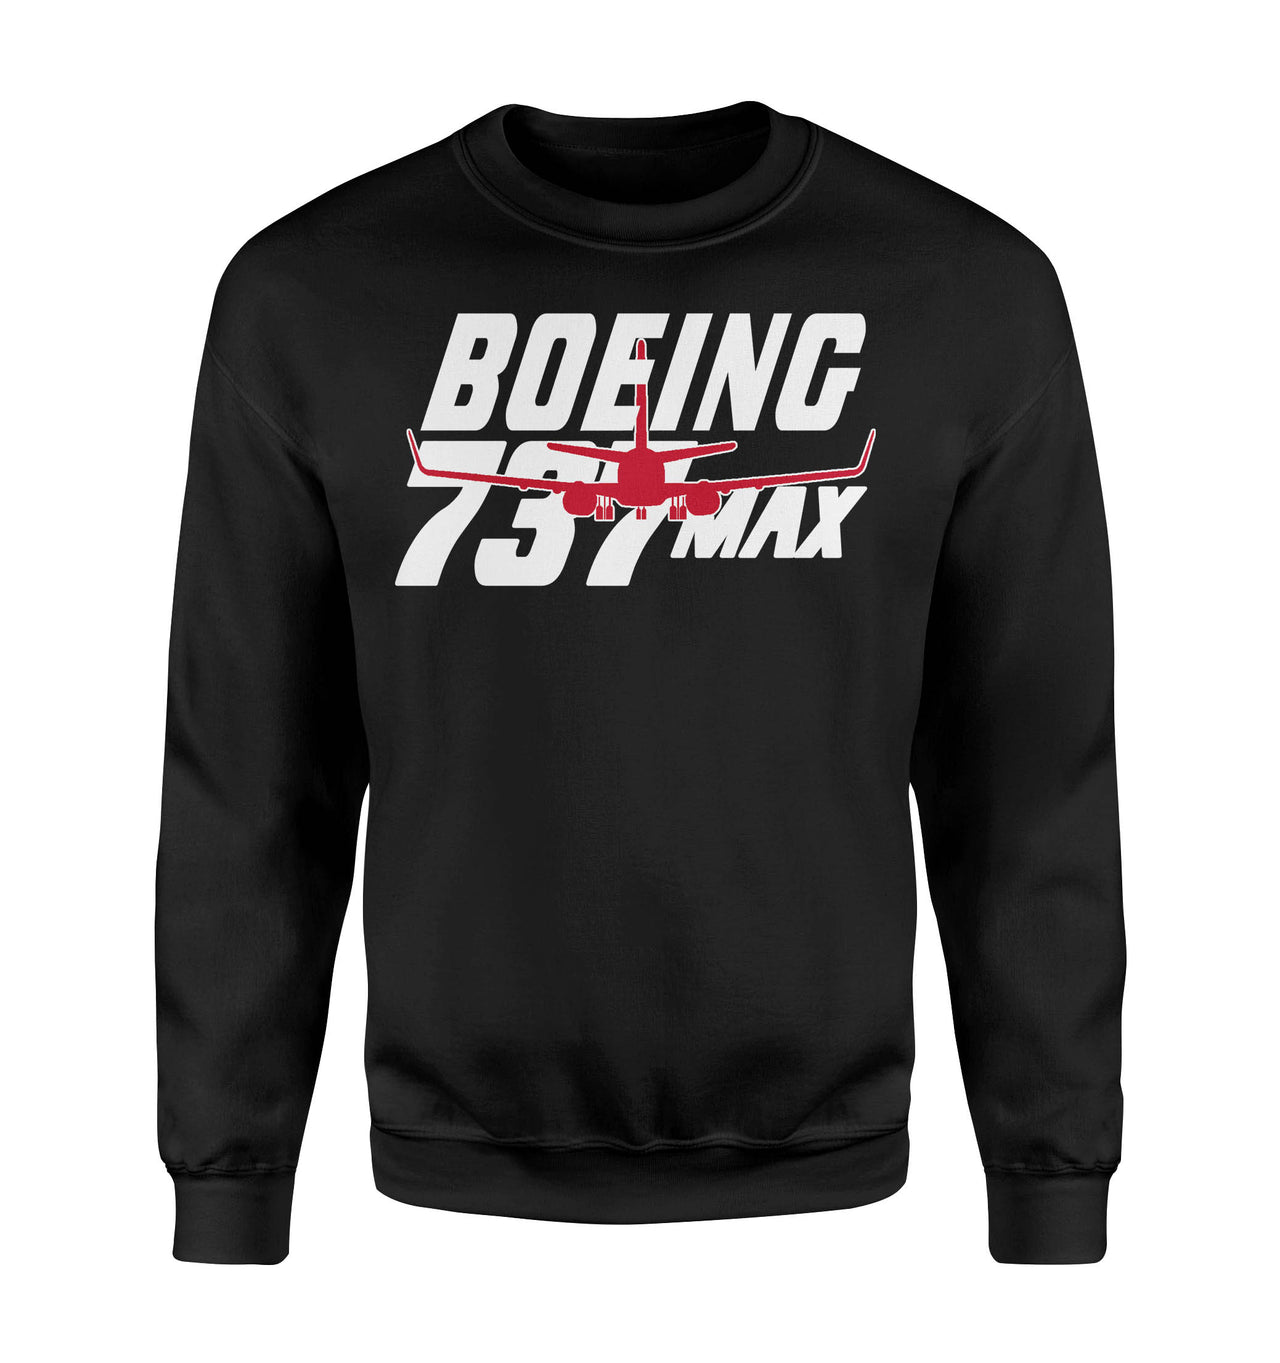 Amazing Boeing 737Max Designed Sweatshirts